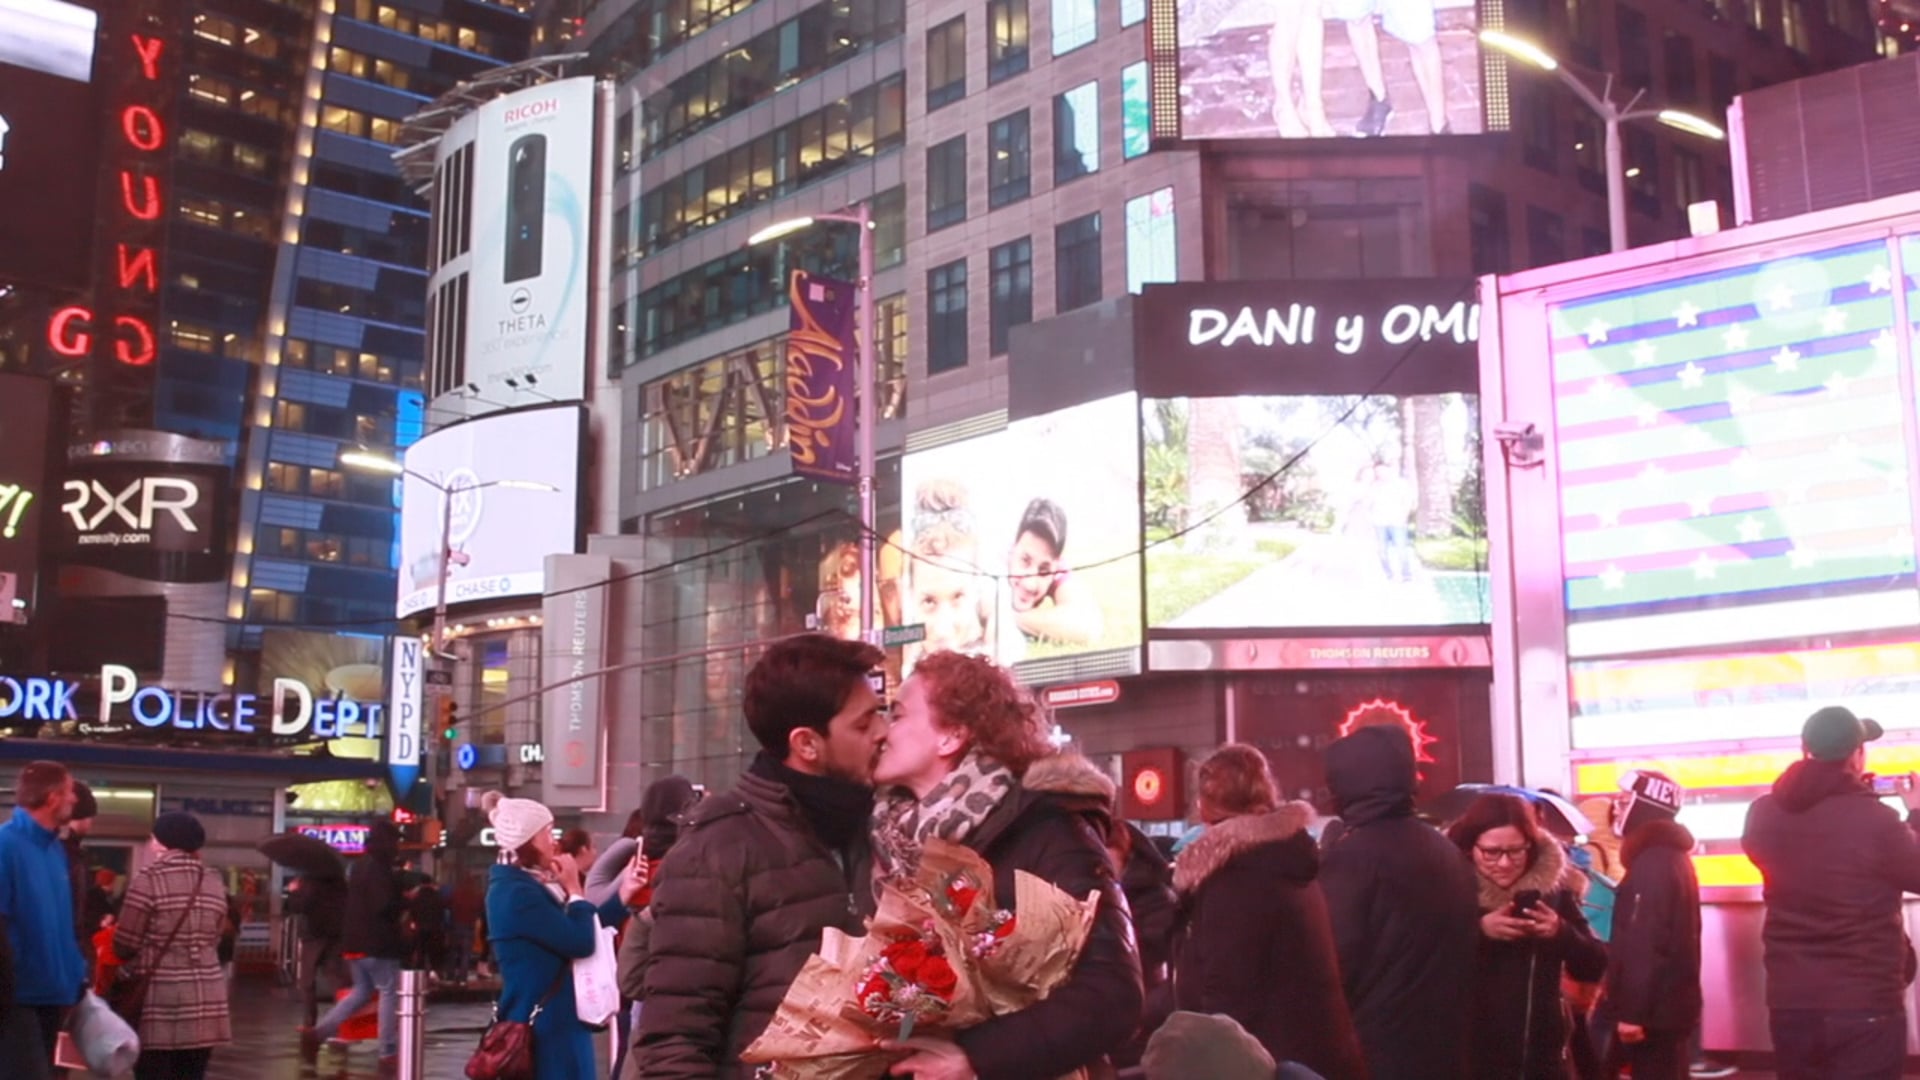 Danielle + Omar Times Square Flash Mob Proposal